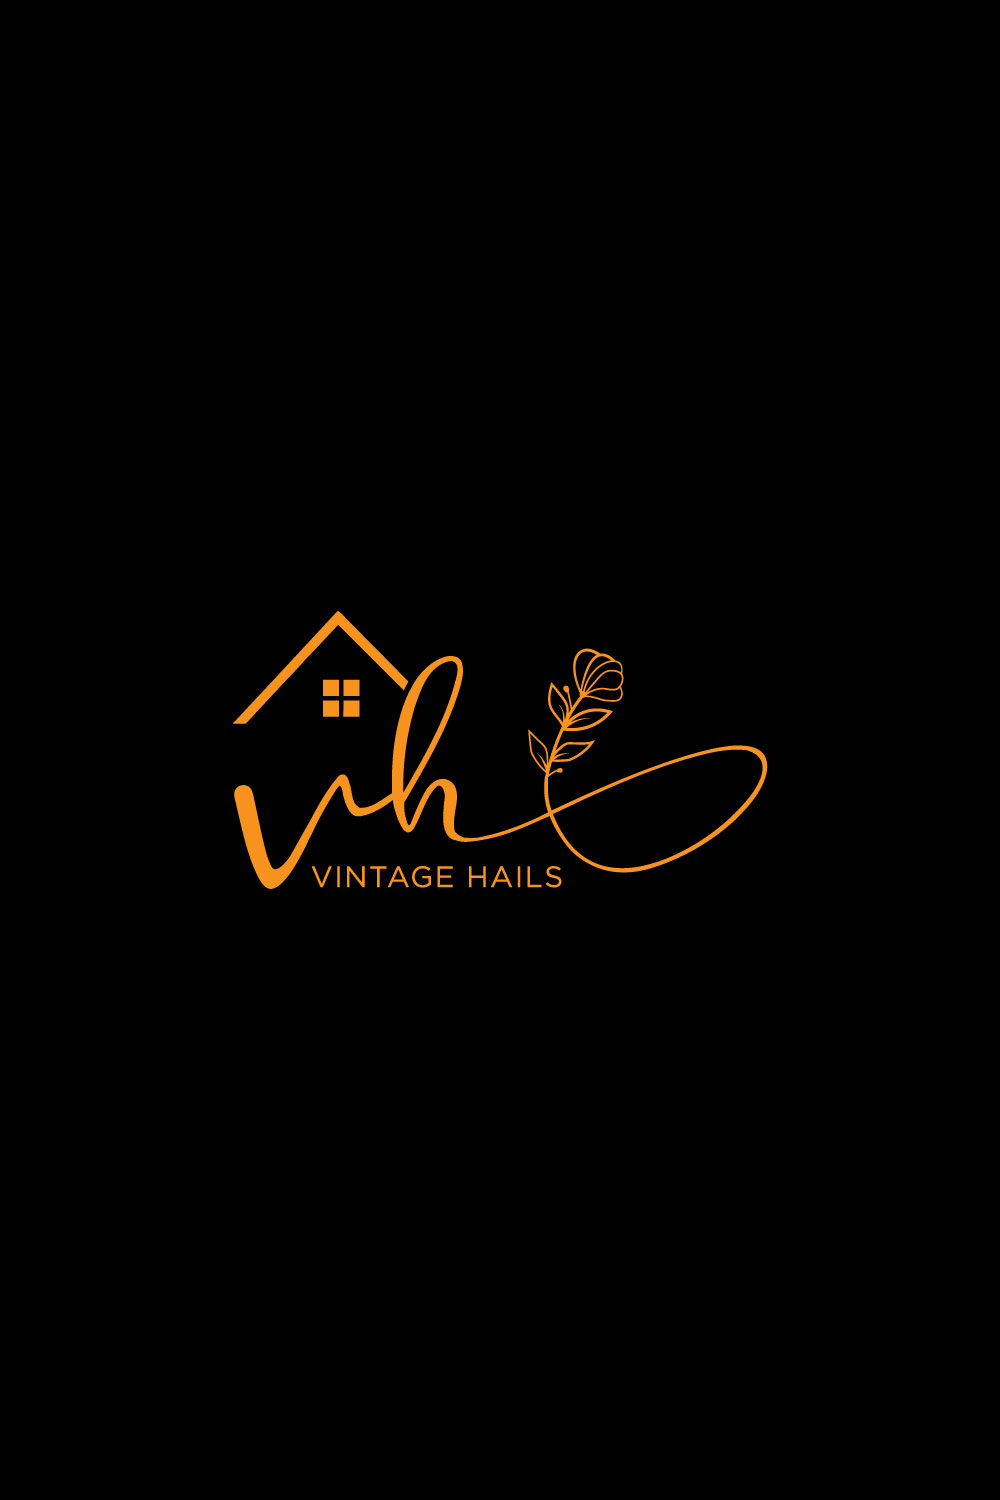 Initial letters vh logo design bundle Royalty Free Vector